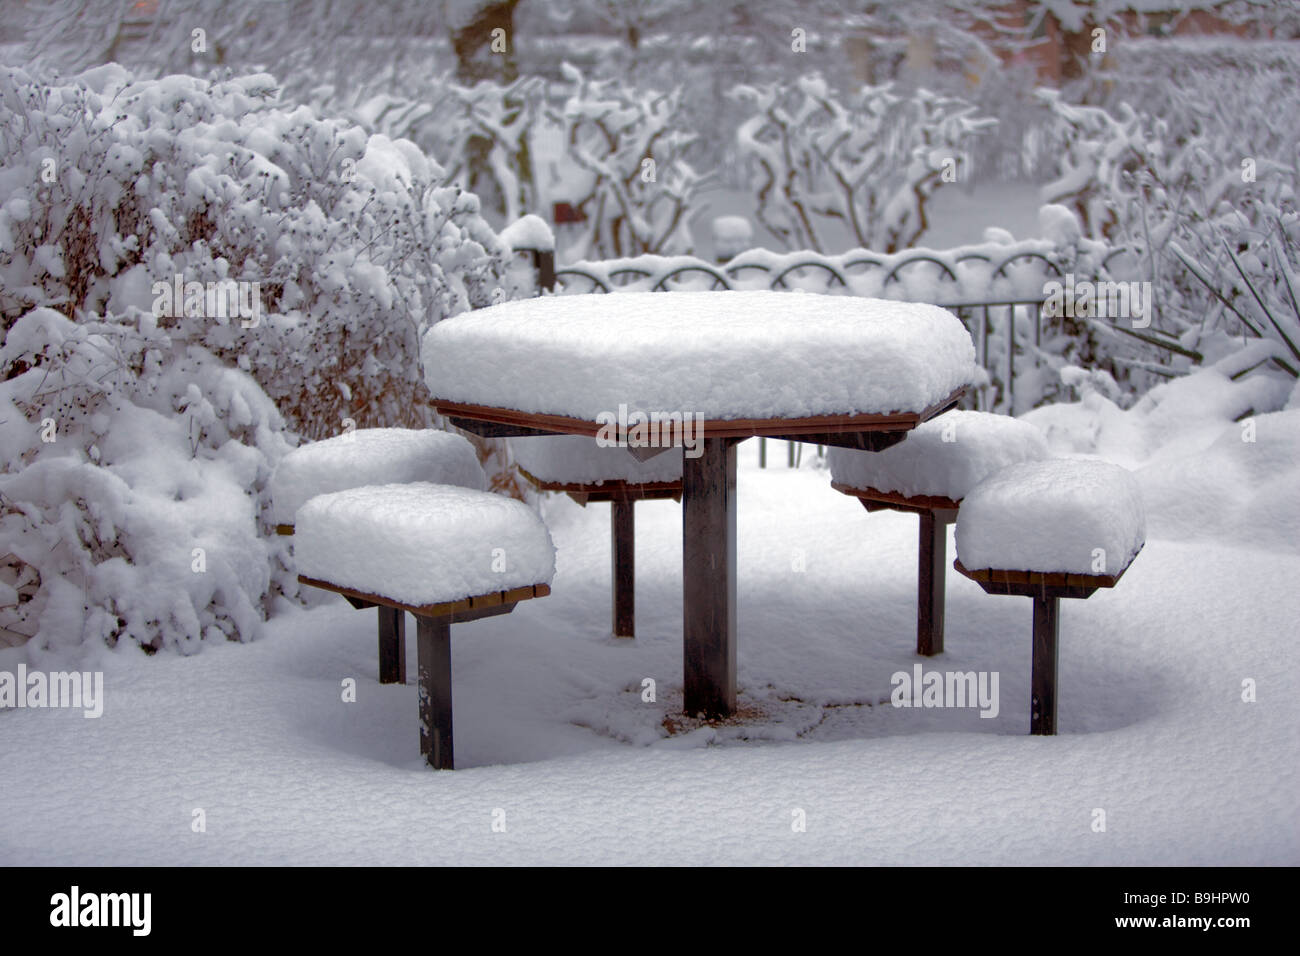 Snow scene - Heavy snowfall covers picnic table and seats - London, England 2009 Stock Photo